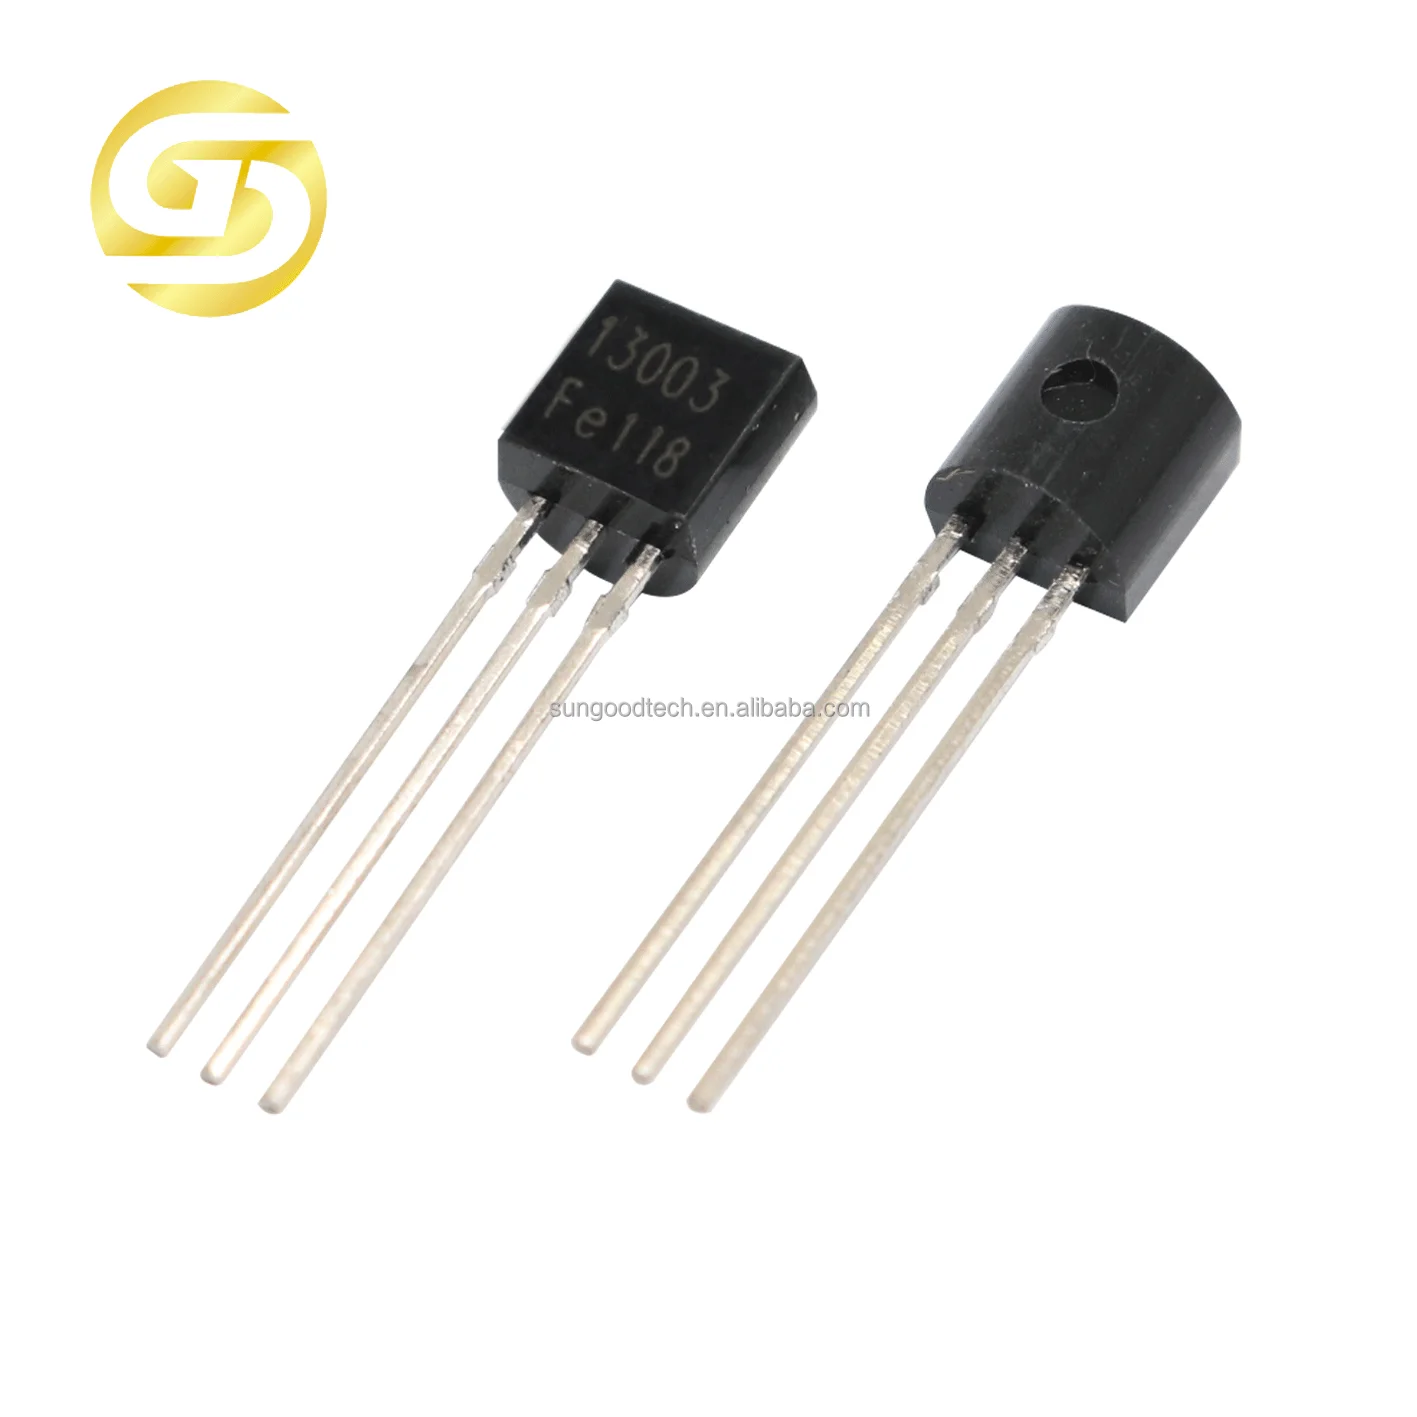 13003 TO-92 NPN Power Transistor 100% Brand New High Quality 1000pcs/bag MJE13003 Large stock